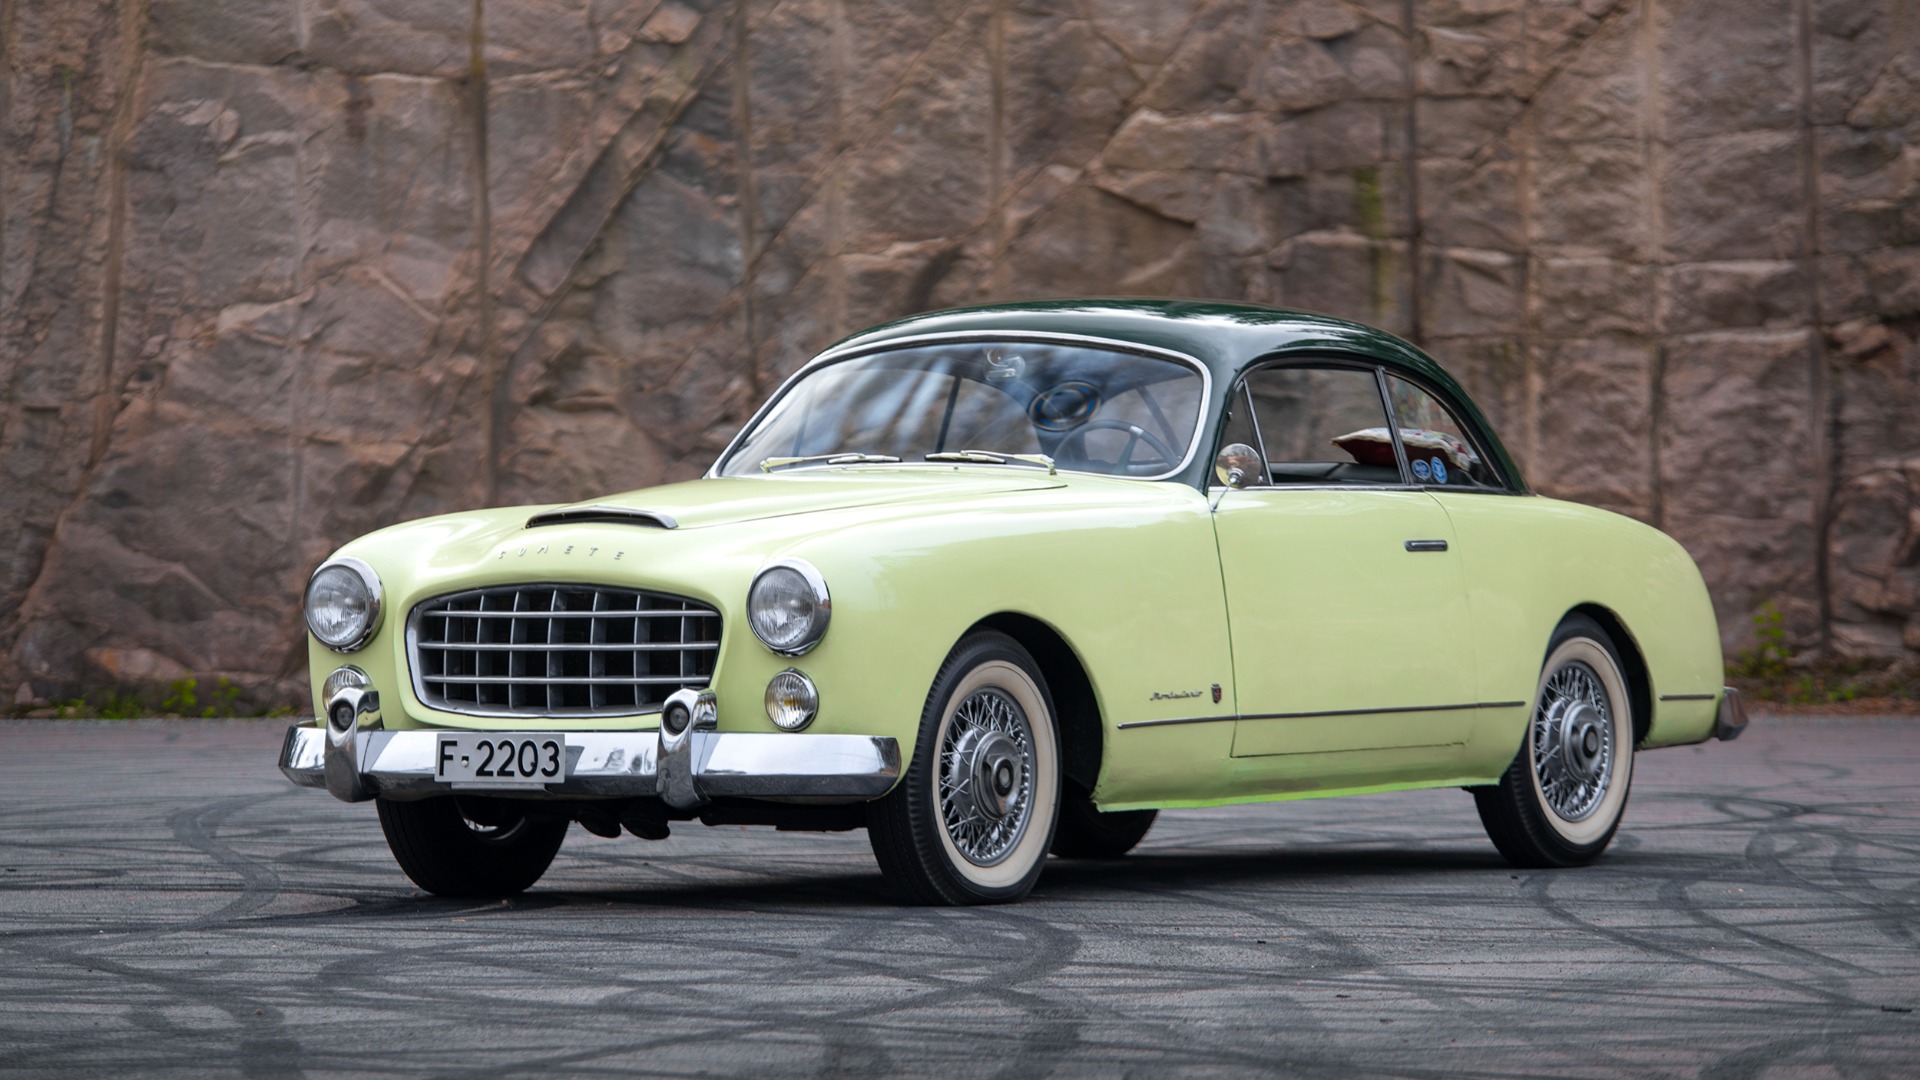 Supersjelden fransk finesse – 1954 Ford Comète Monte Carlo